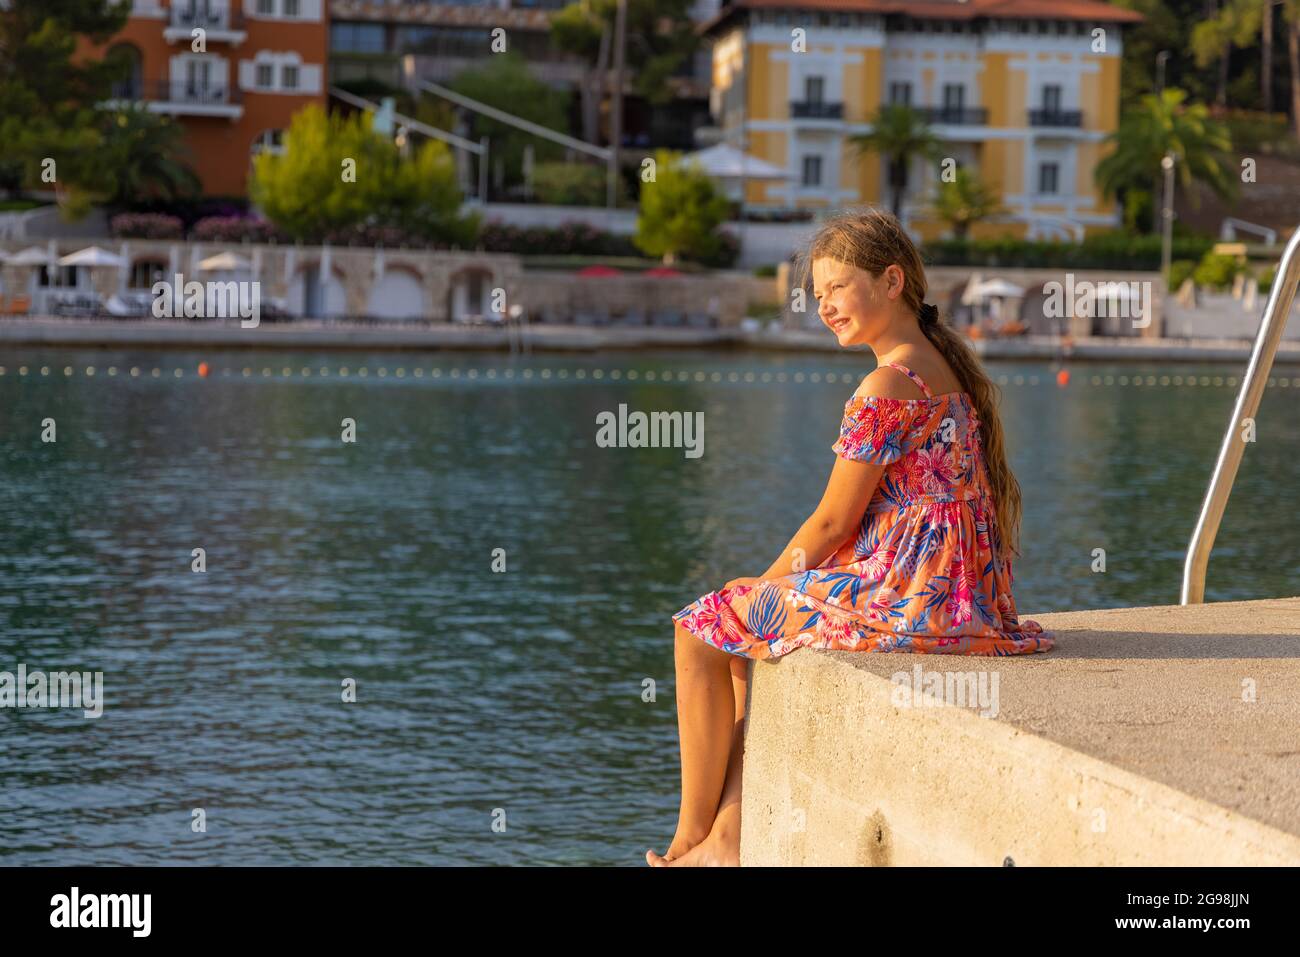 A barefoot female child in a dress on a beach in Mali Losinj, Croatia Stock Photo